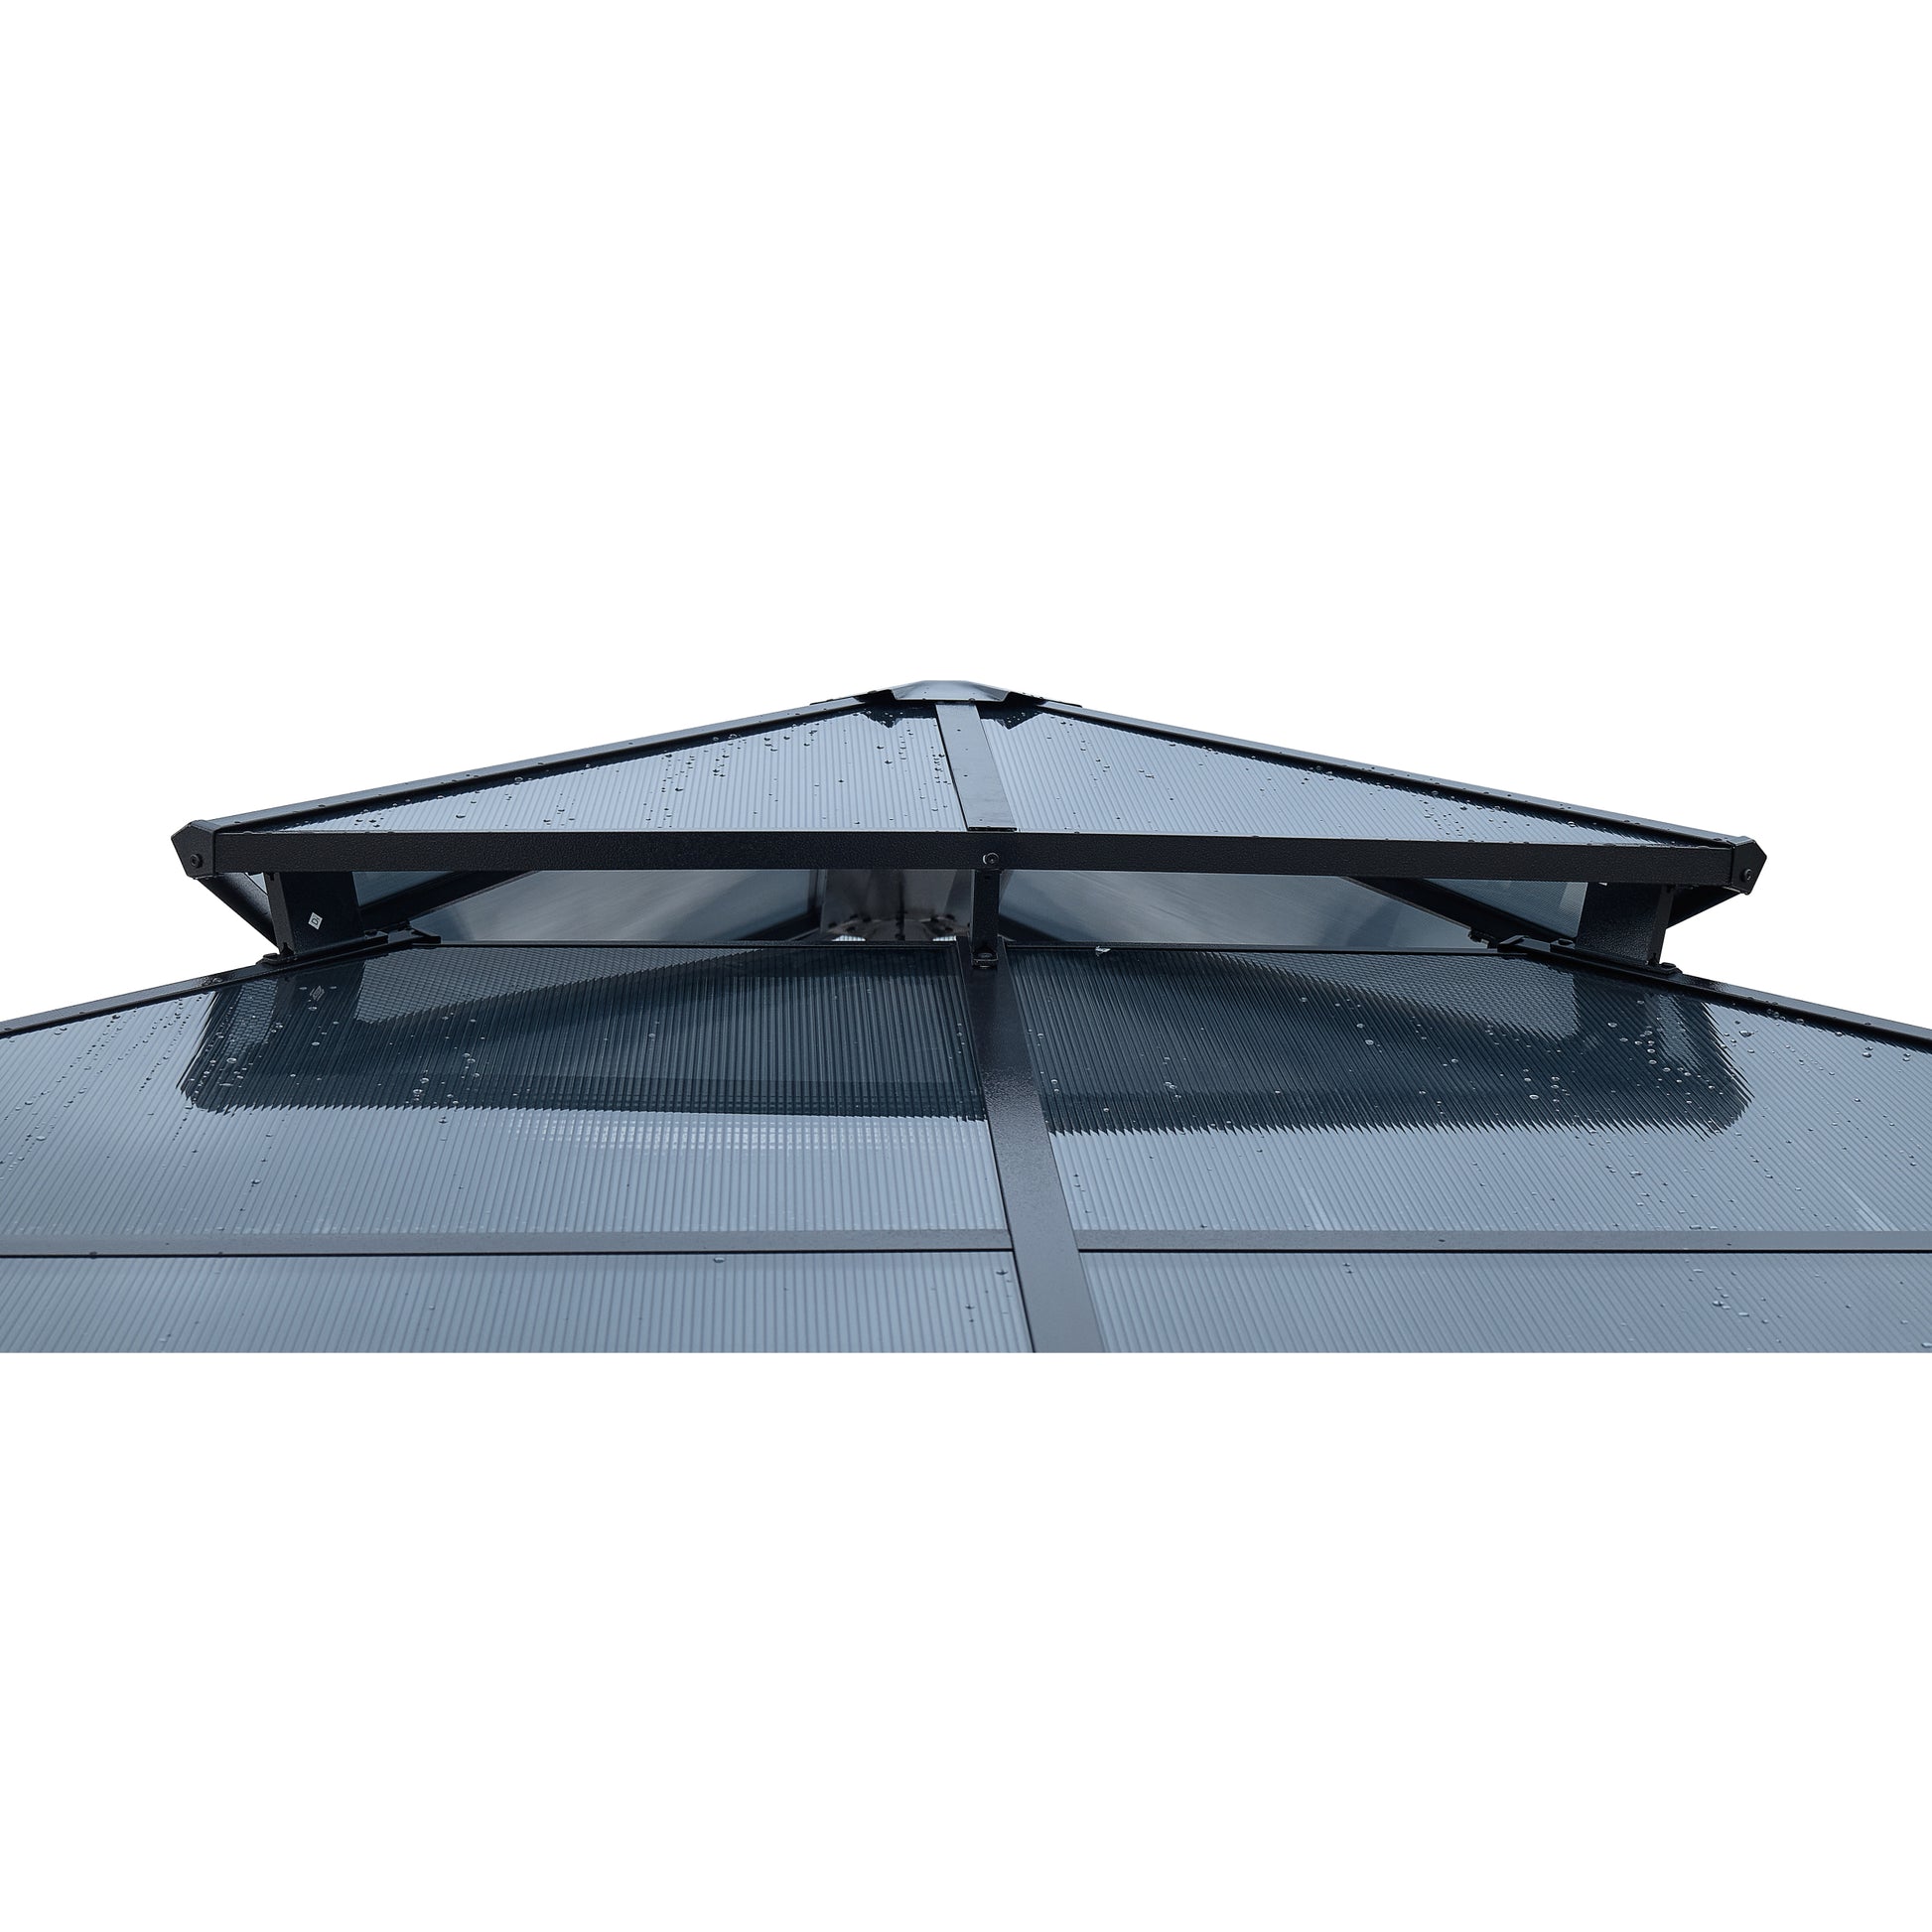 12' x 16' Gazebo Polycarbonate Double Roof Canopy